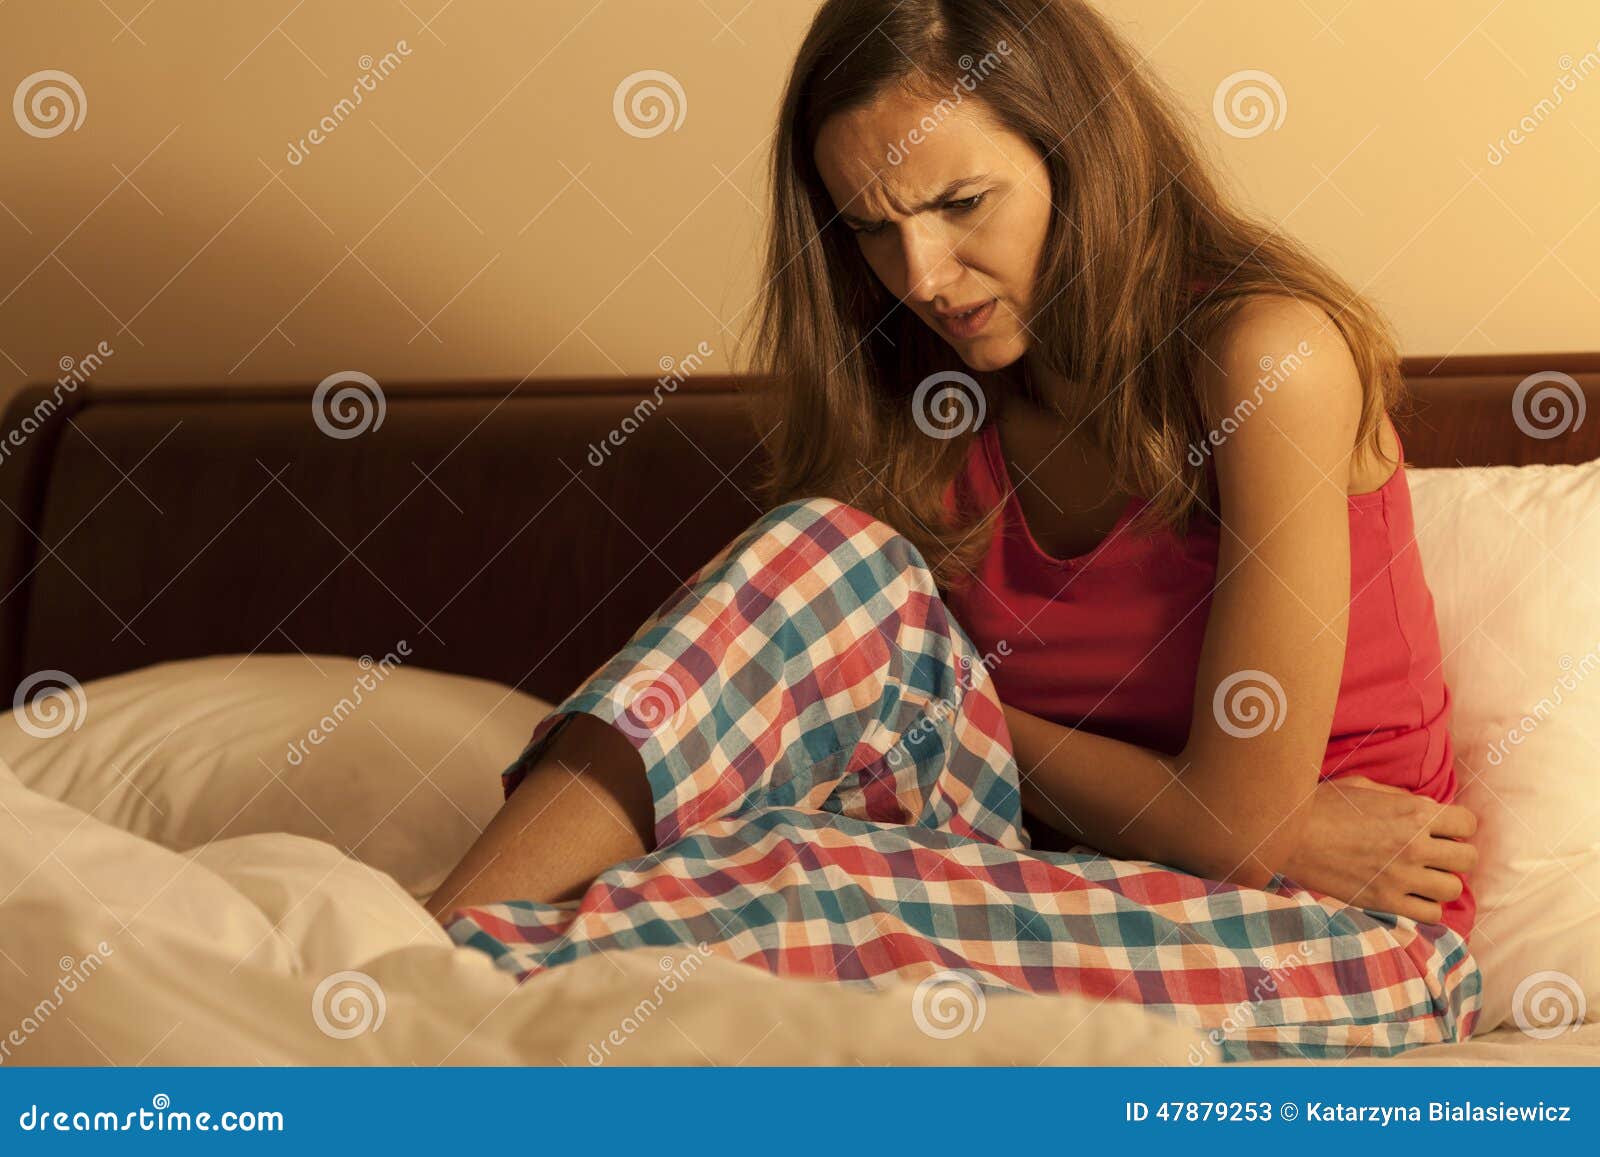 Woman Having Menstruation Stock Image Image Of Problem 47879253